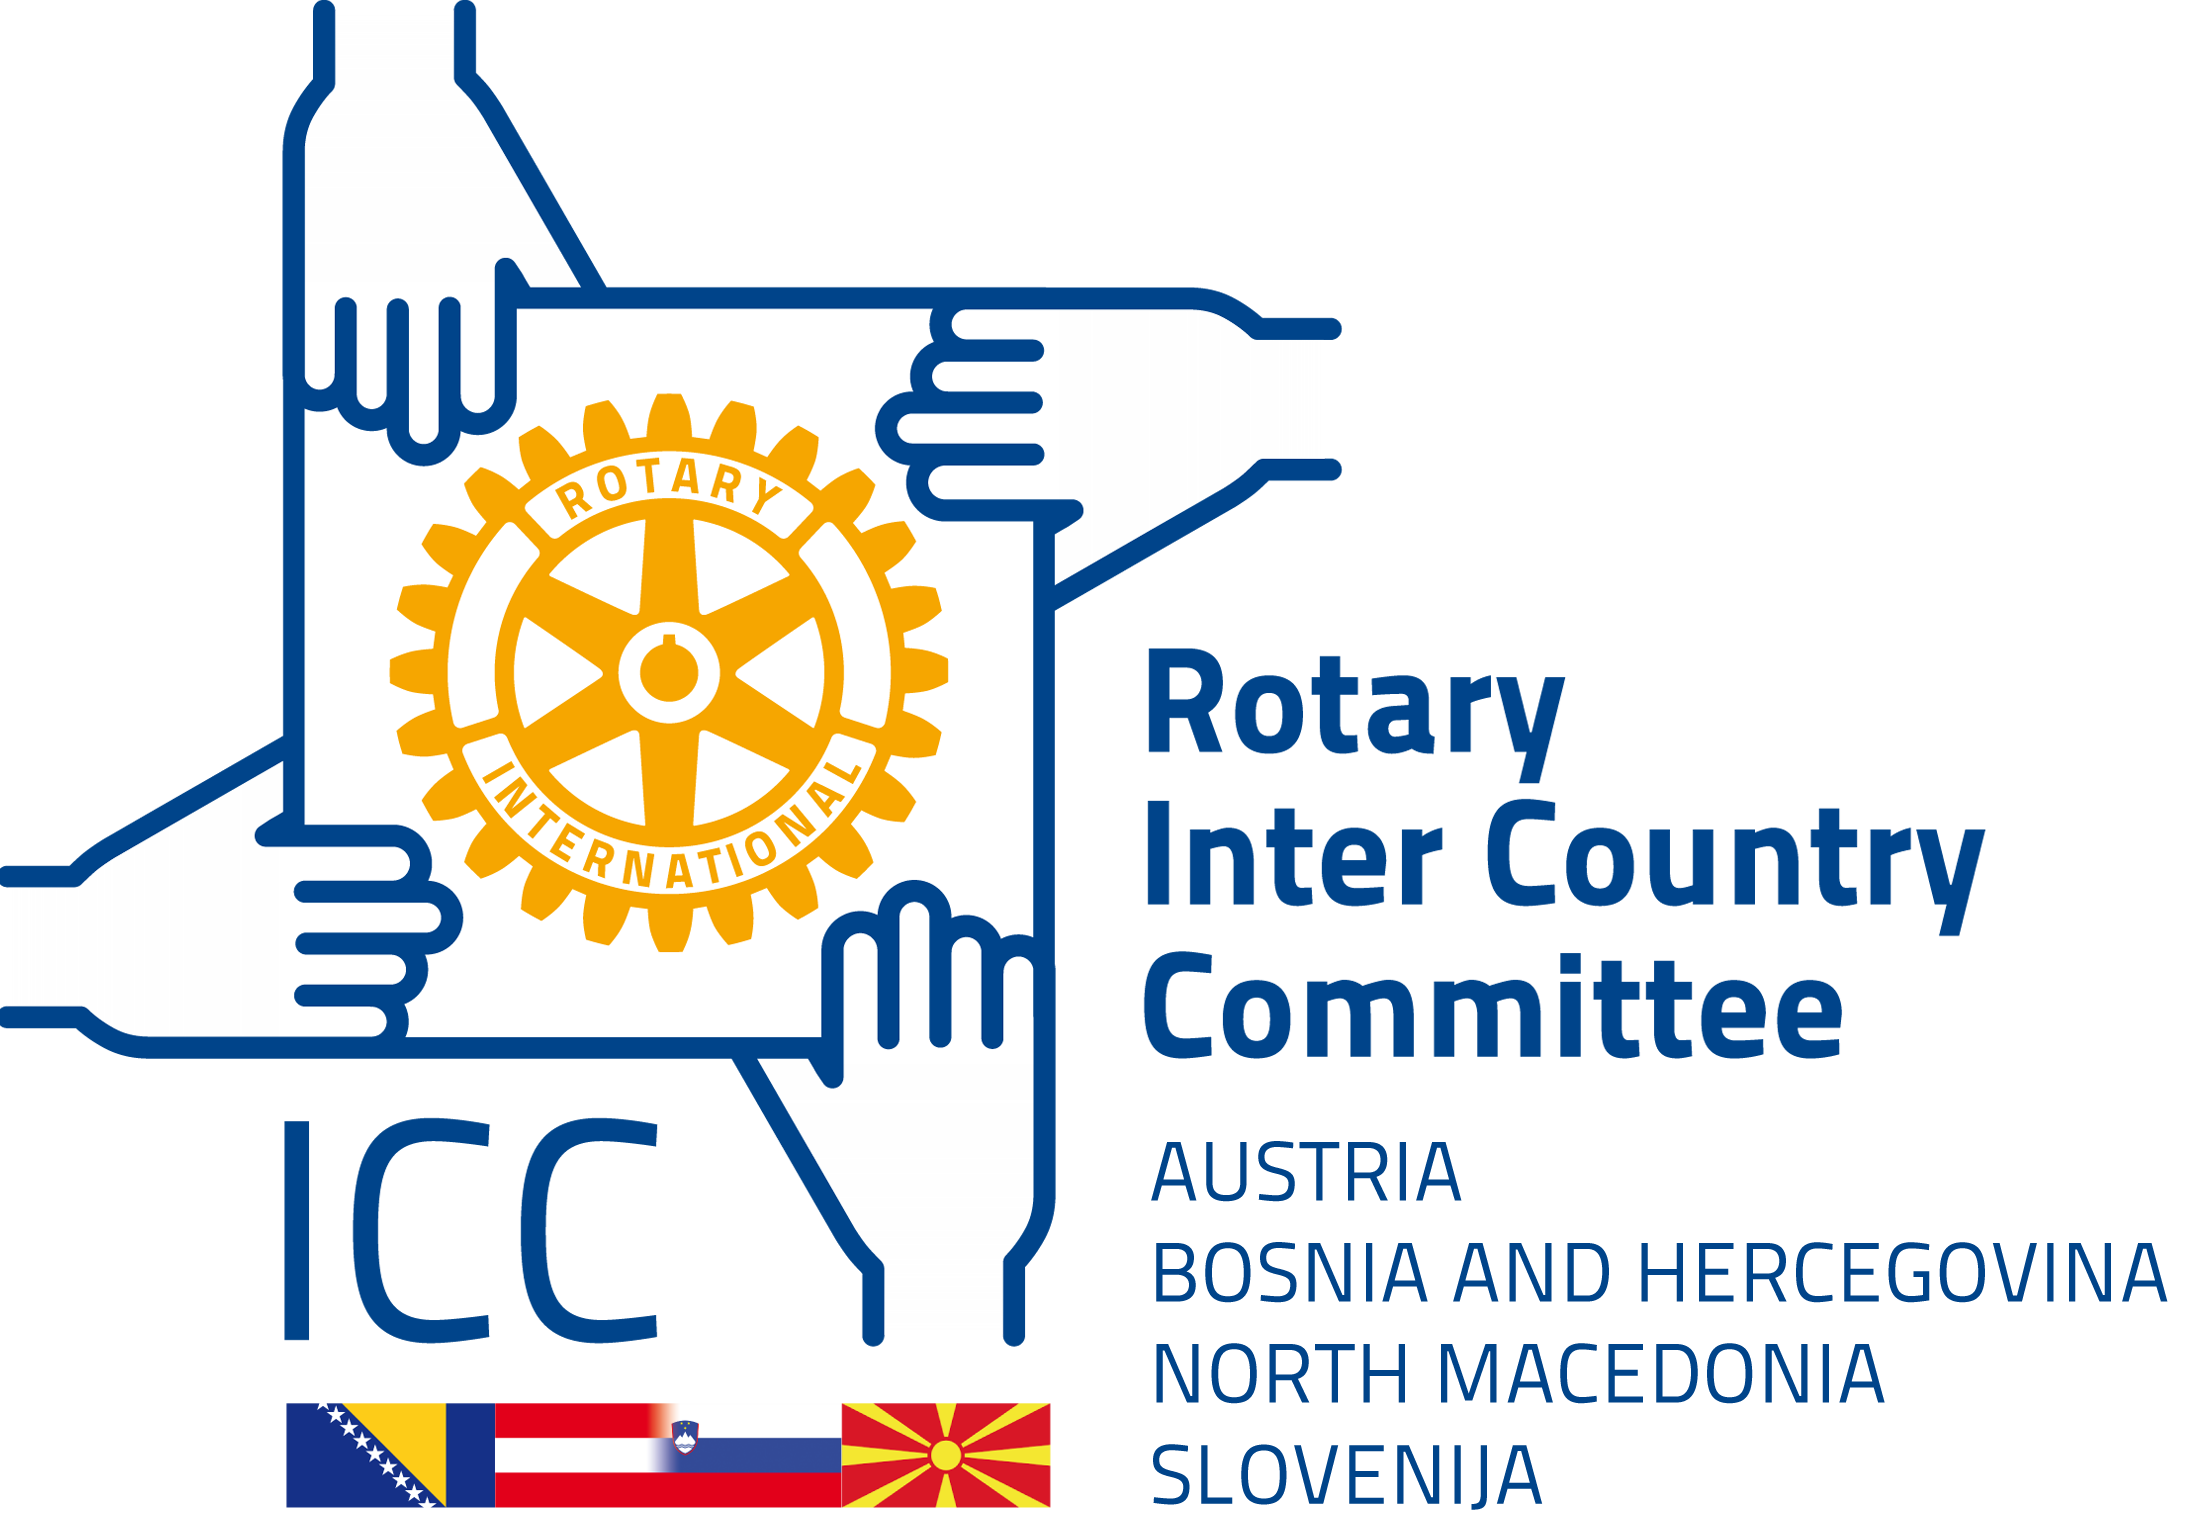 Presentation of Rotary ICC Romania and USA